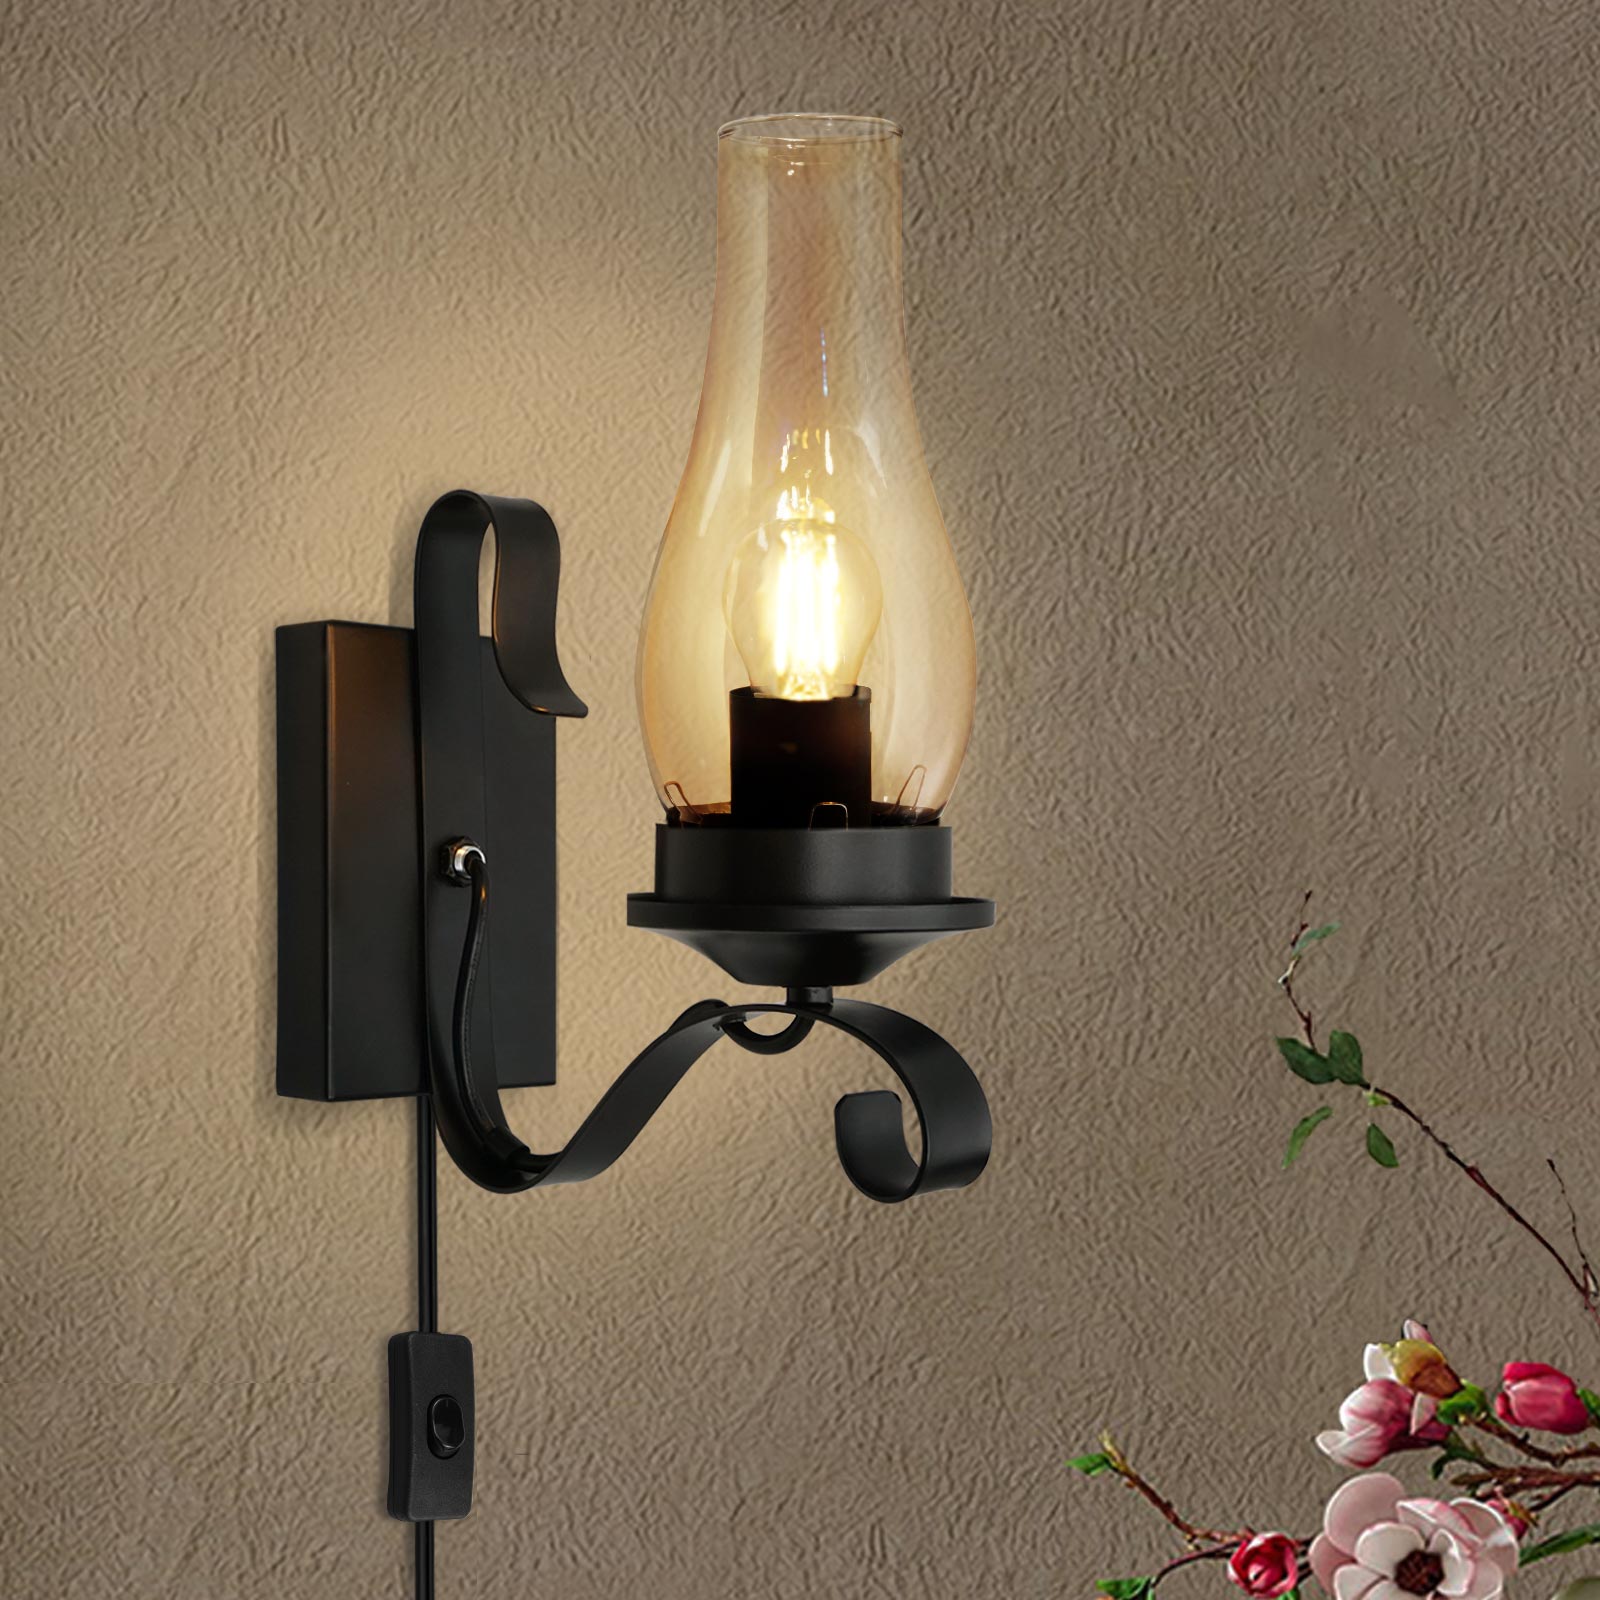 V01 Antique Kerosene Lamps Metal for Outdoor Farmhouse Indoor Bedroom